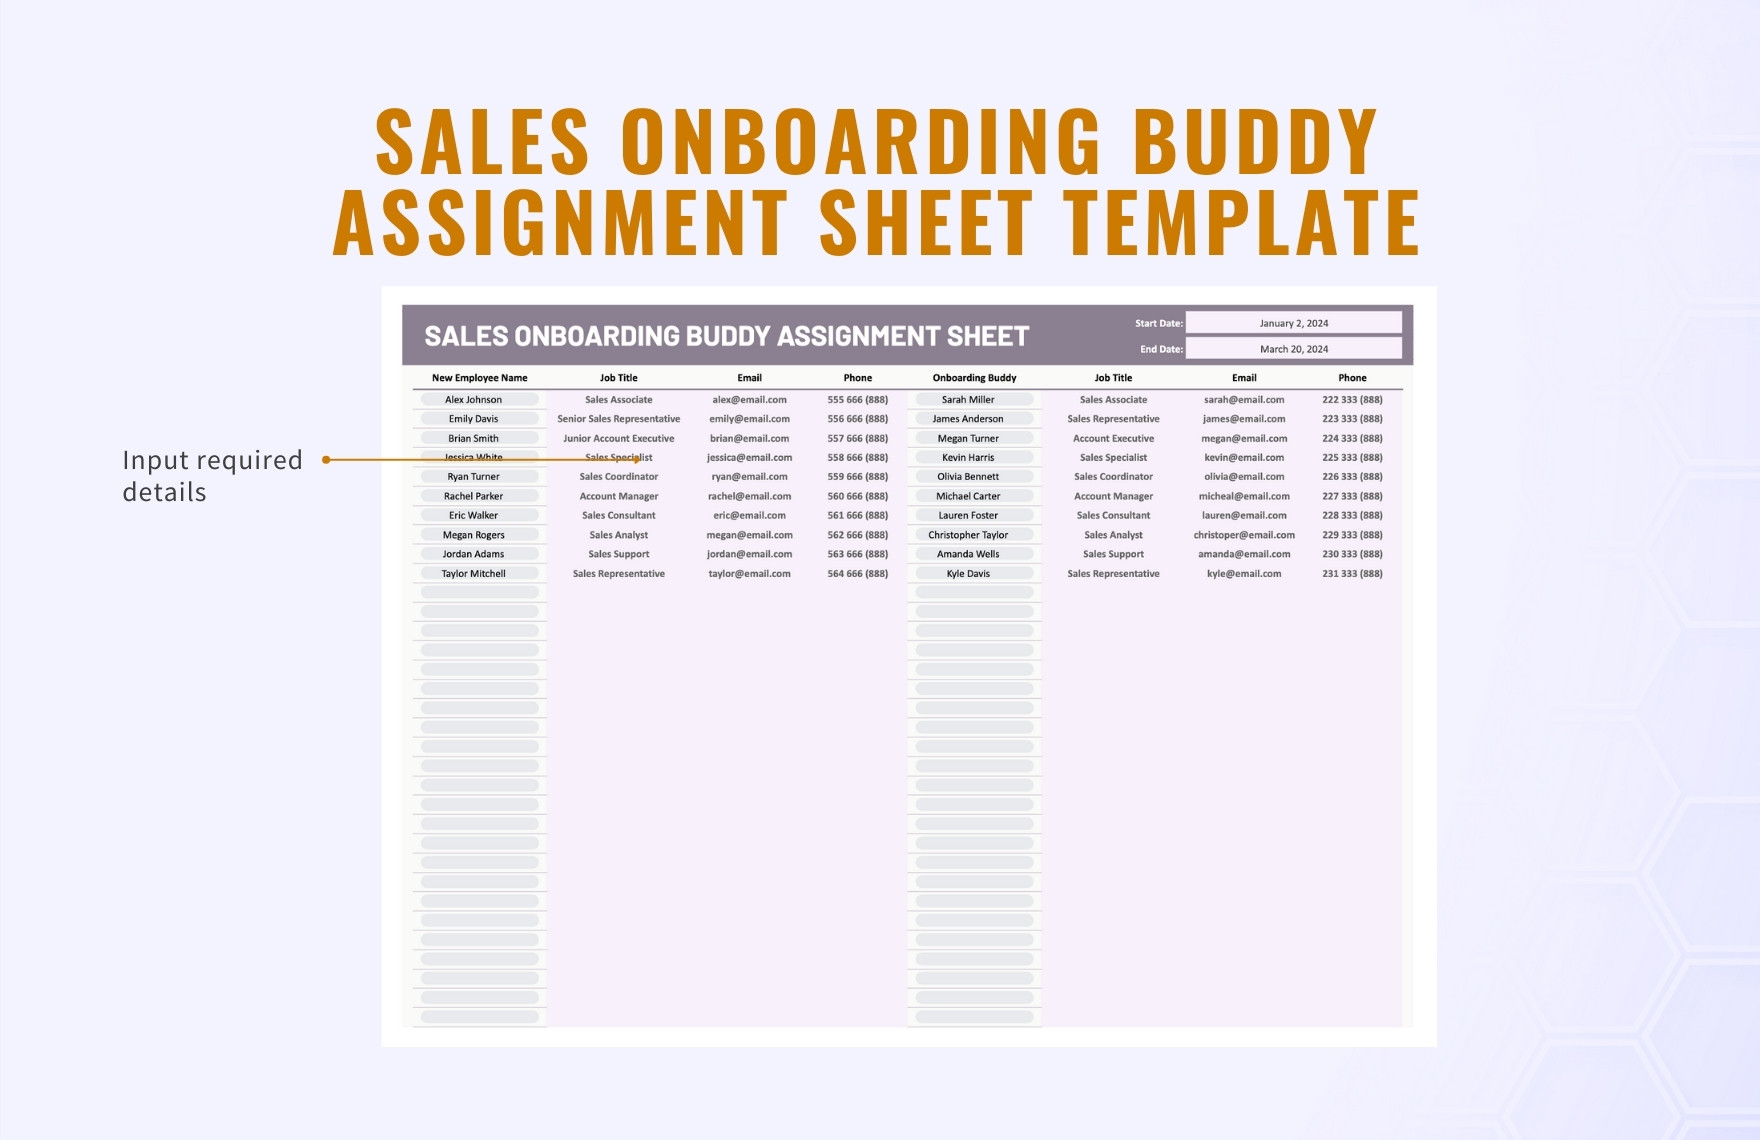 Sales Onboarding Buddy Assignment Sheet Template